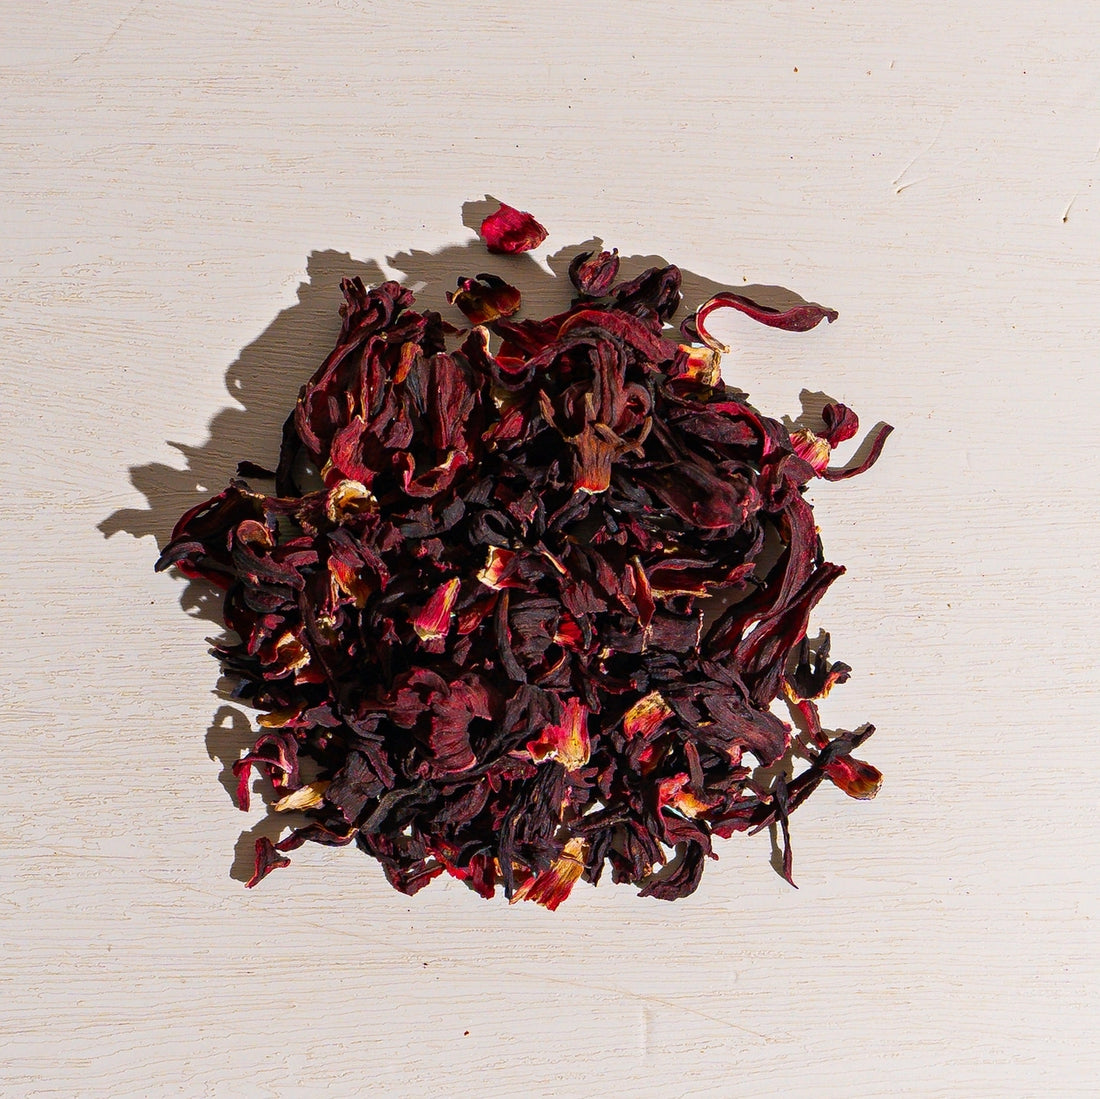 Hibiscus Herbal Tea